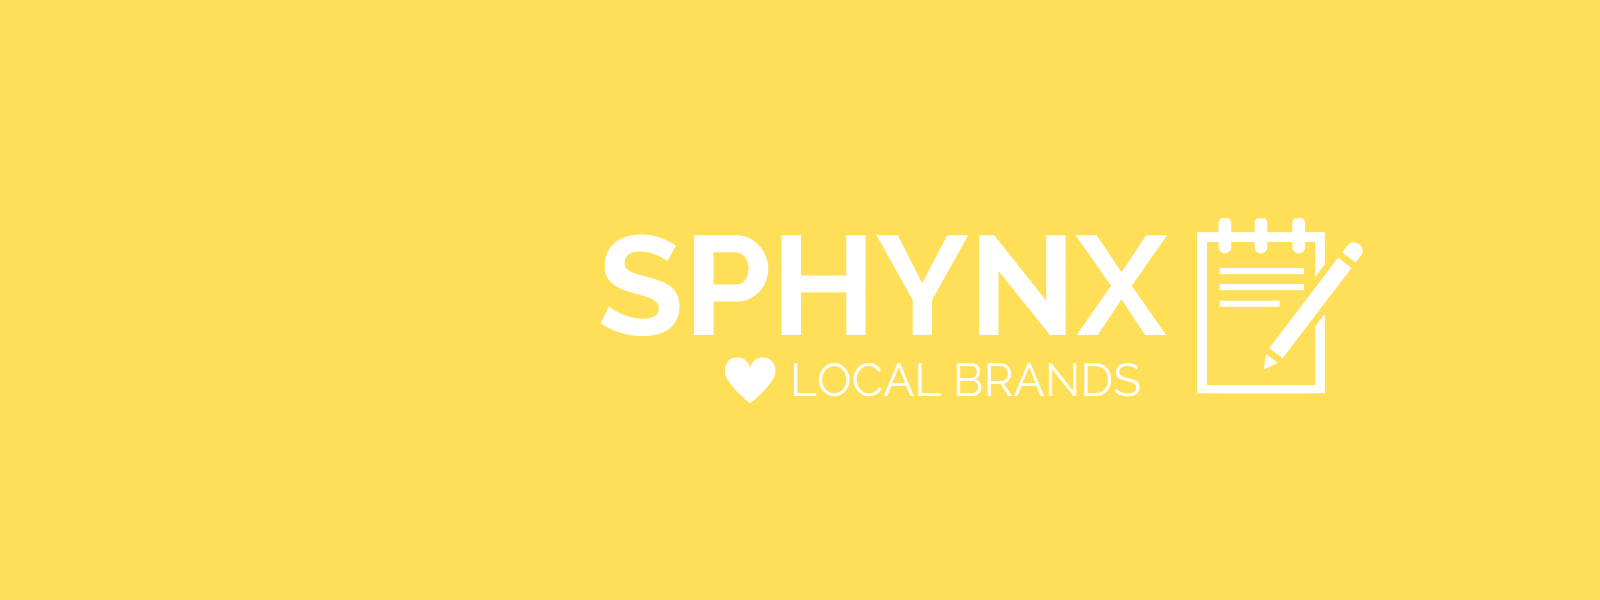 sphynx loves local brands